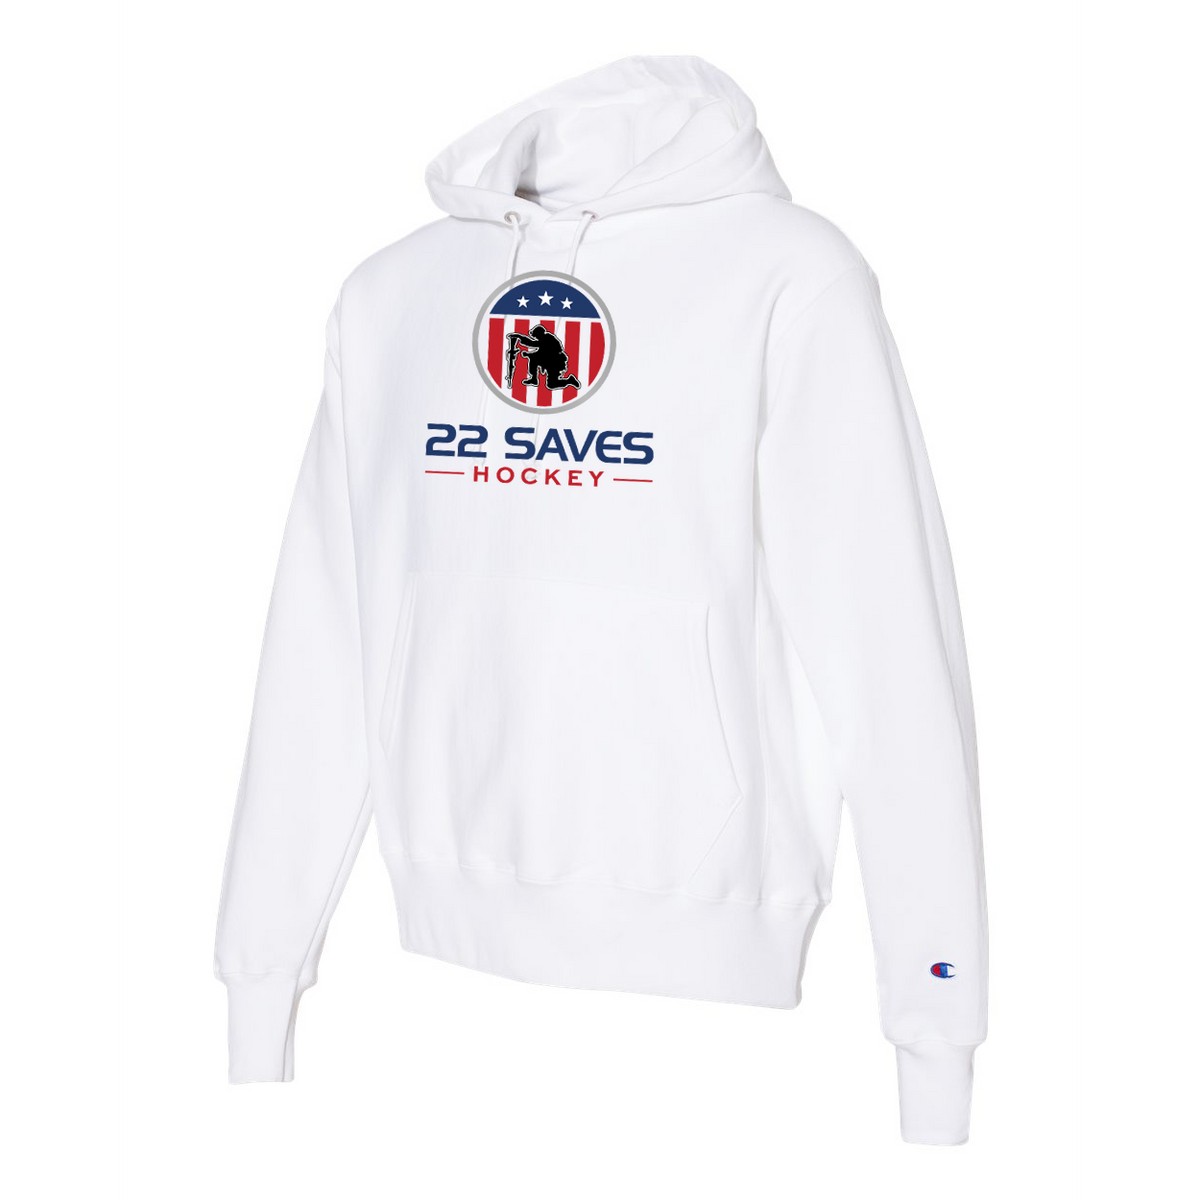 22 Saves Hockey Champion Sweatshirt